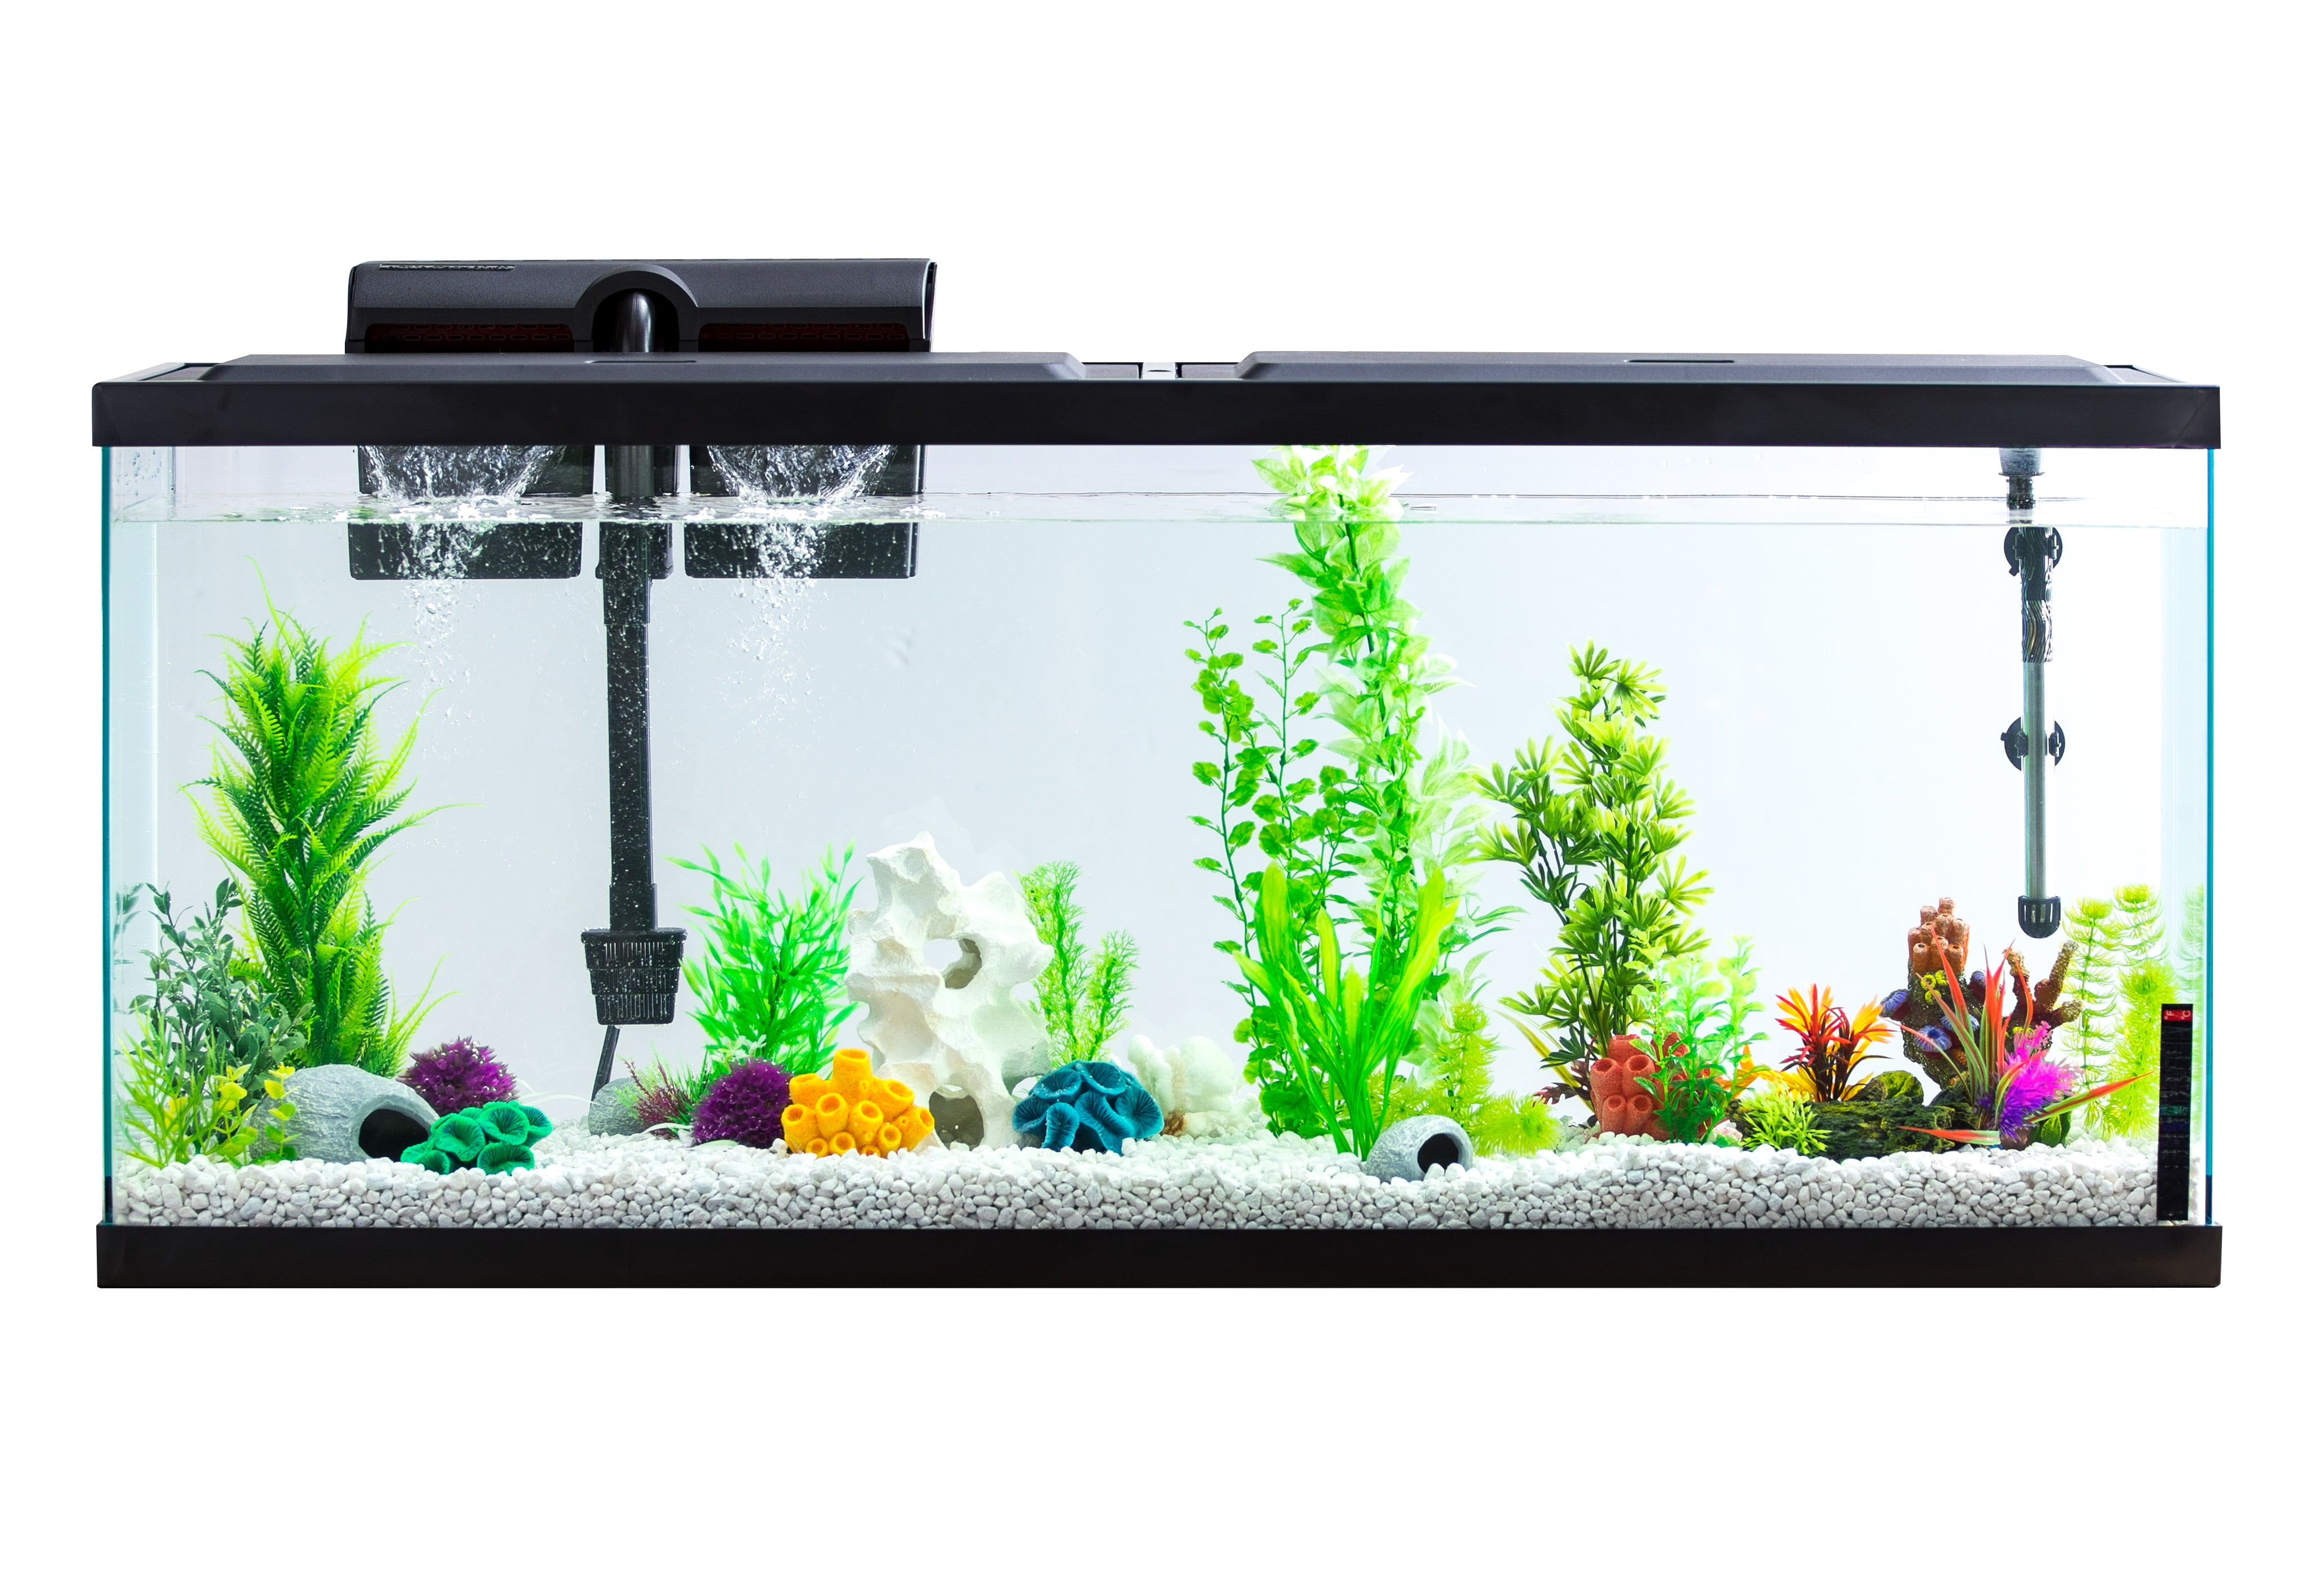 Seminarie Meevoelen Claire Aqua Culture 55-Gallon Glass Fish Tank LED Aquarium Kit (Online Only Price)  - Walmart.com